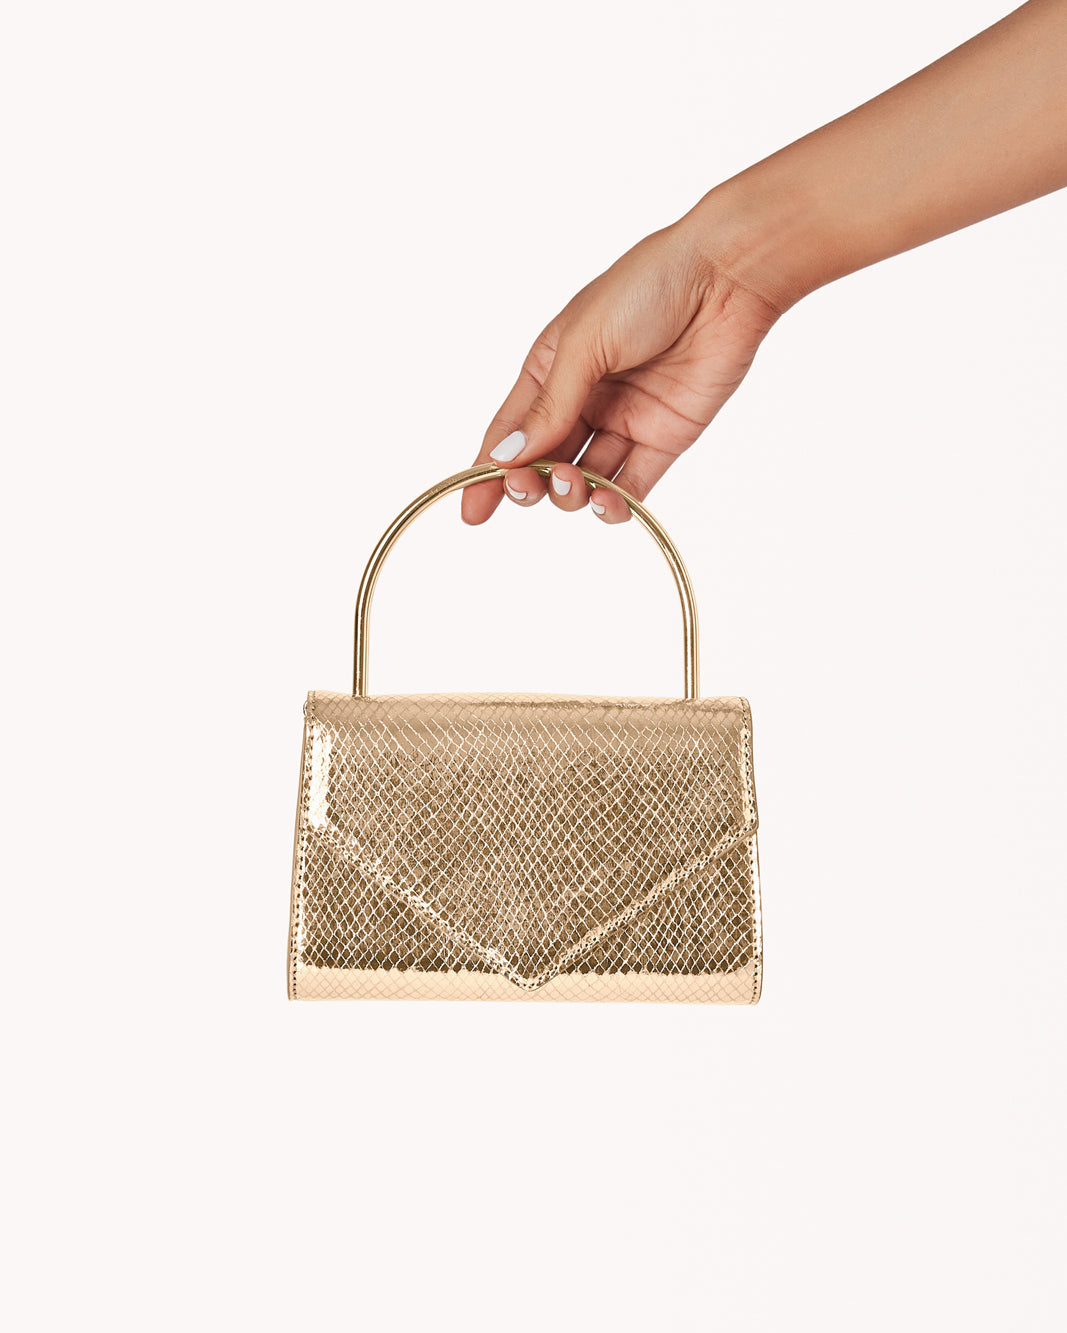 ASTON HANDLE BAG - GOLD SCALE-Handbags-Billini-O/S-Billini